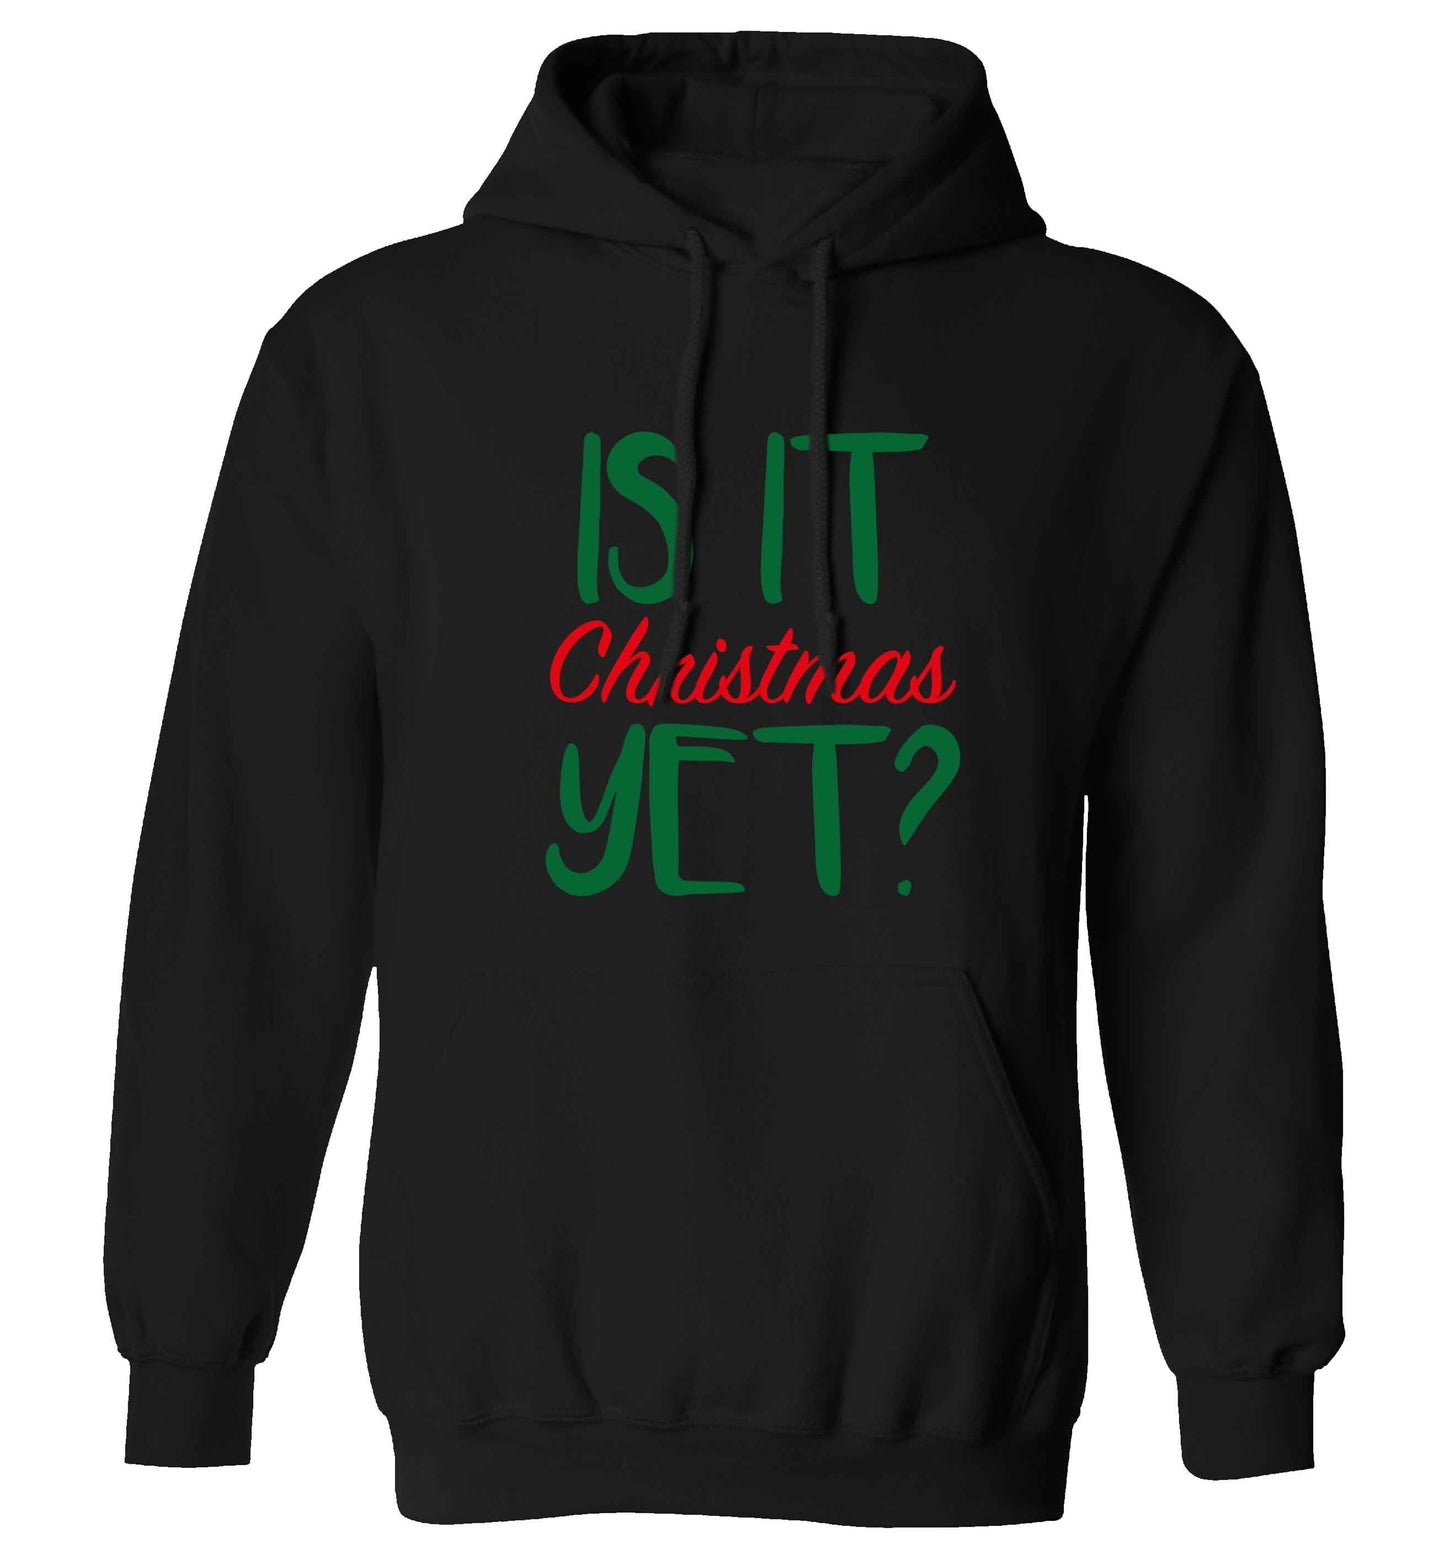 Is it Christmas yet? adults unisex black hoodie 2XL